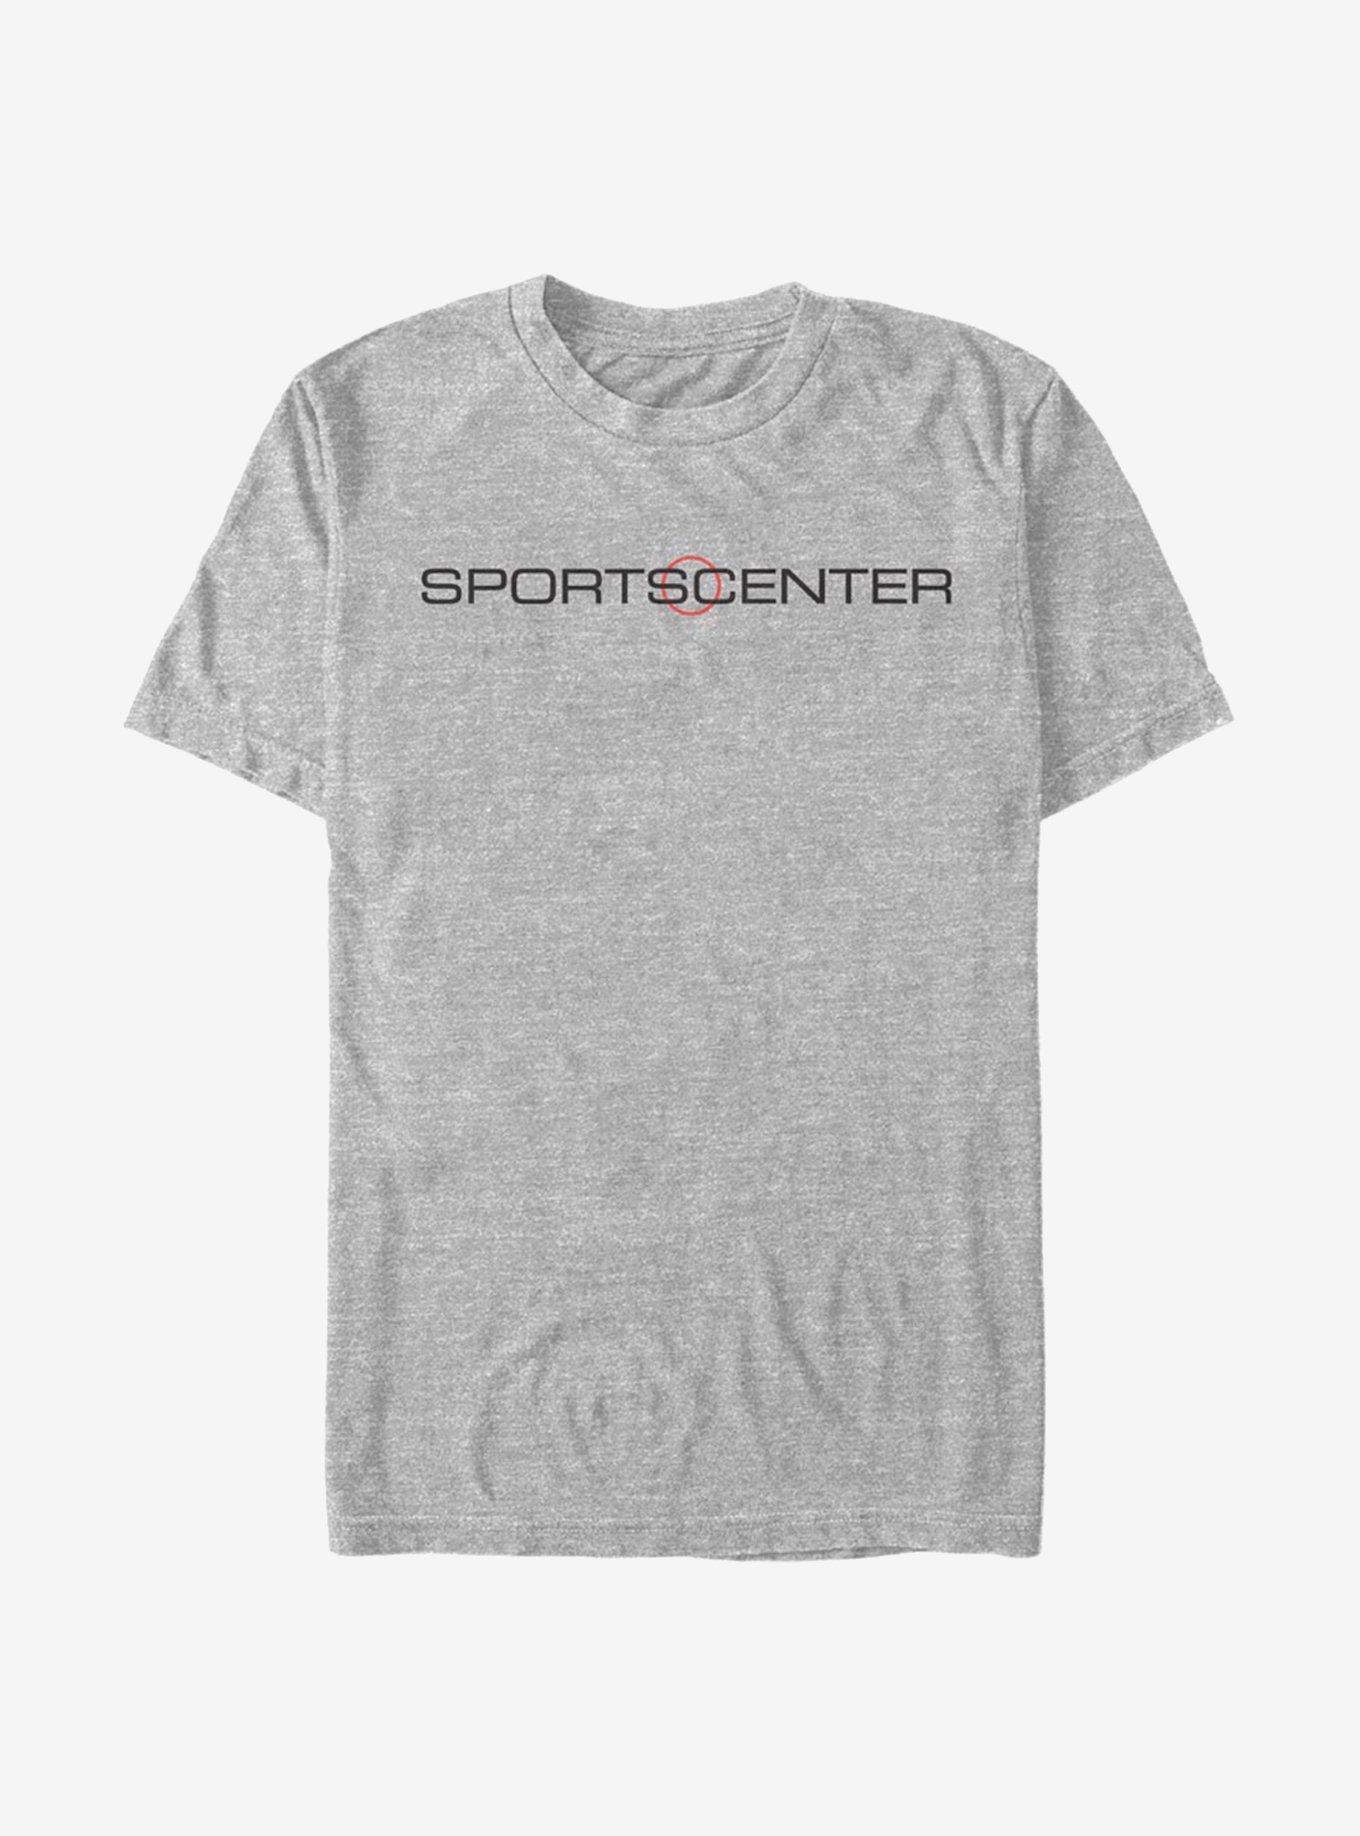 ESPN Sportscenter Horizontal T-Shirt